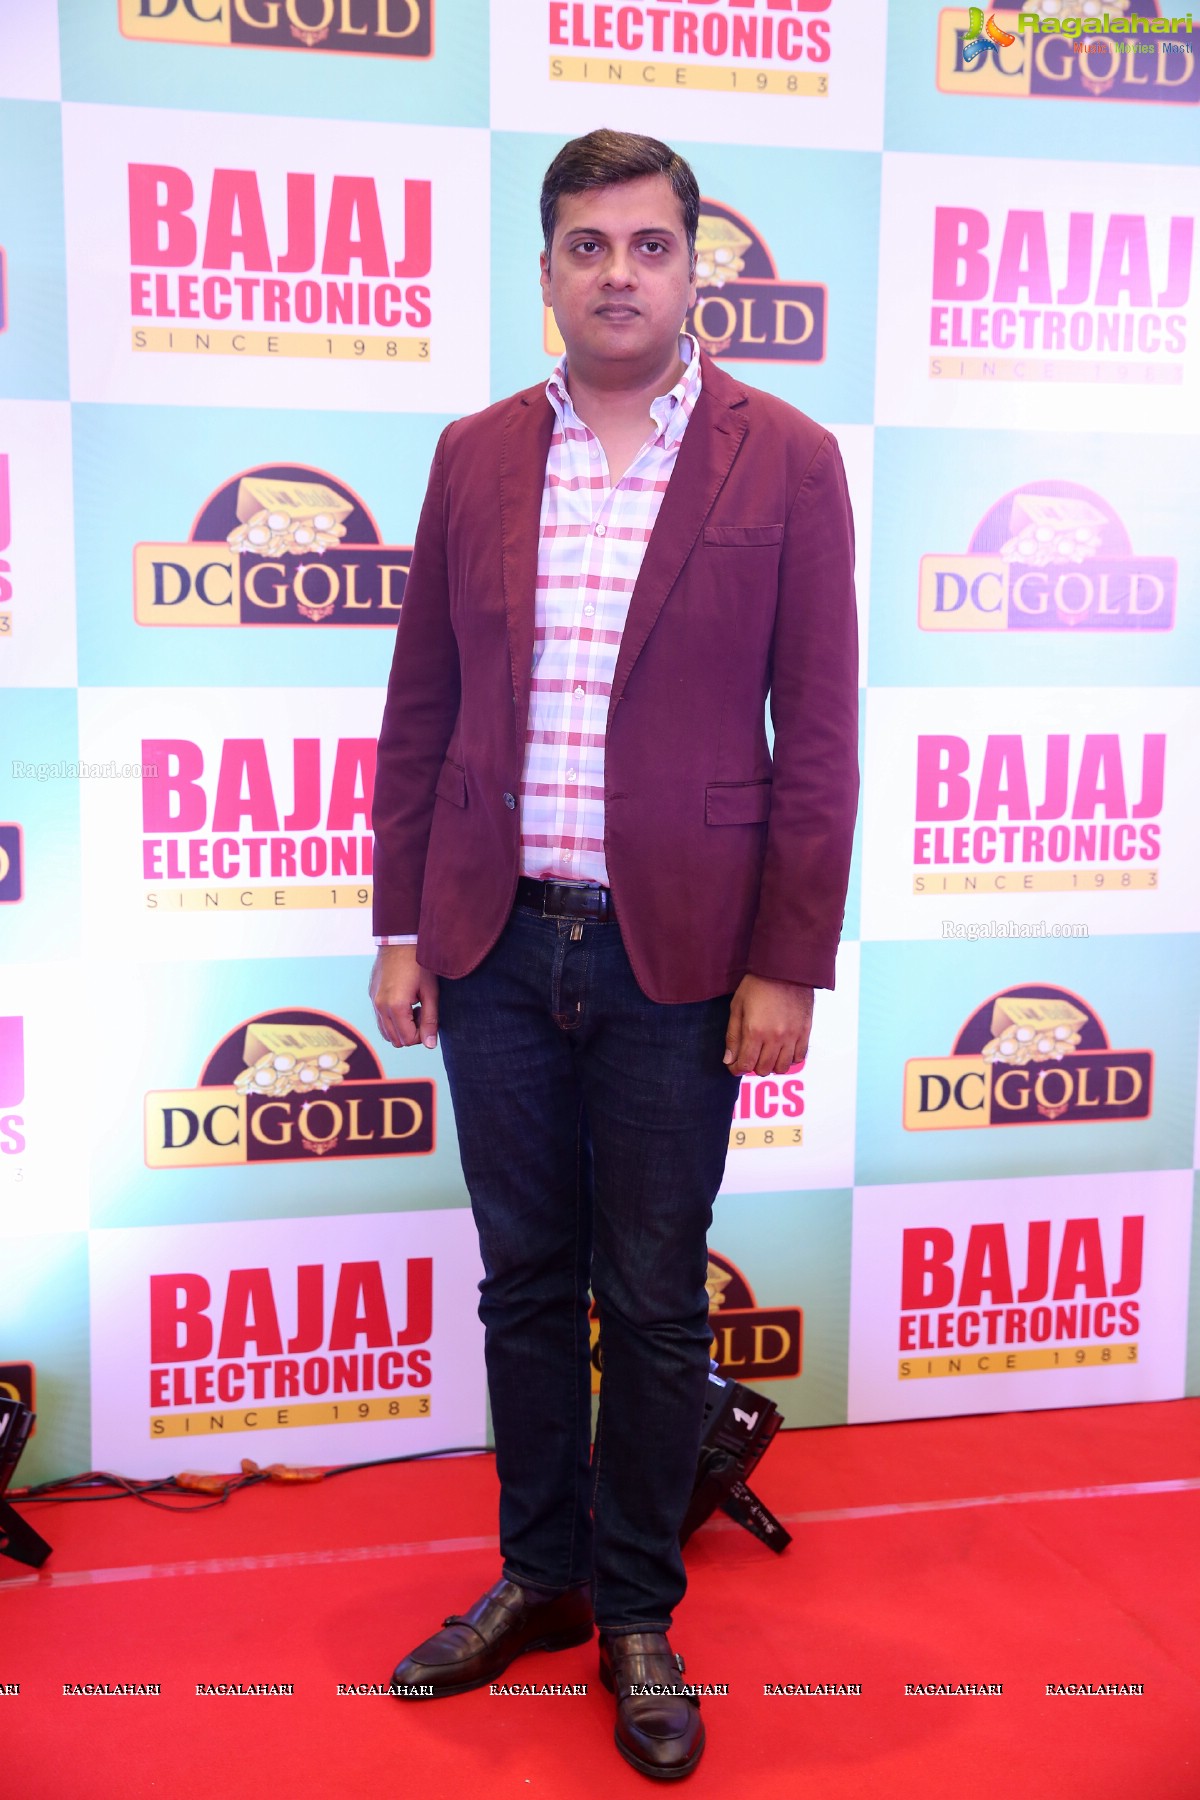 Bajaj Electronics Gold Hungama 2019 Winner Announcement at Forum Sujana Mall